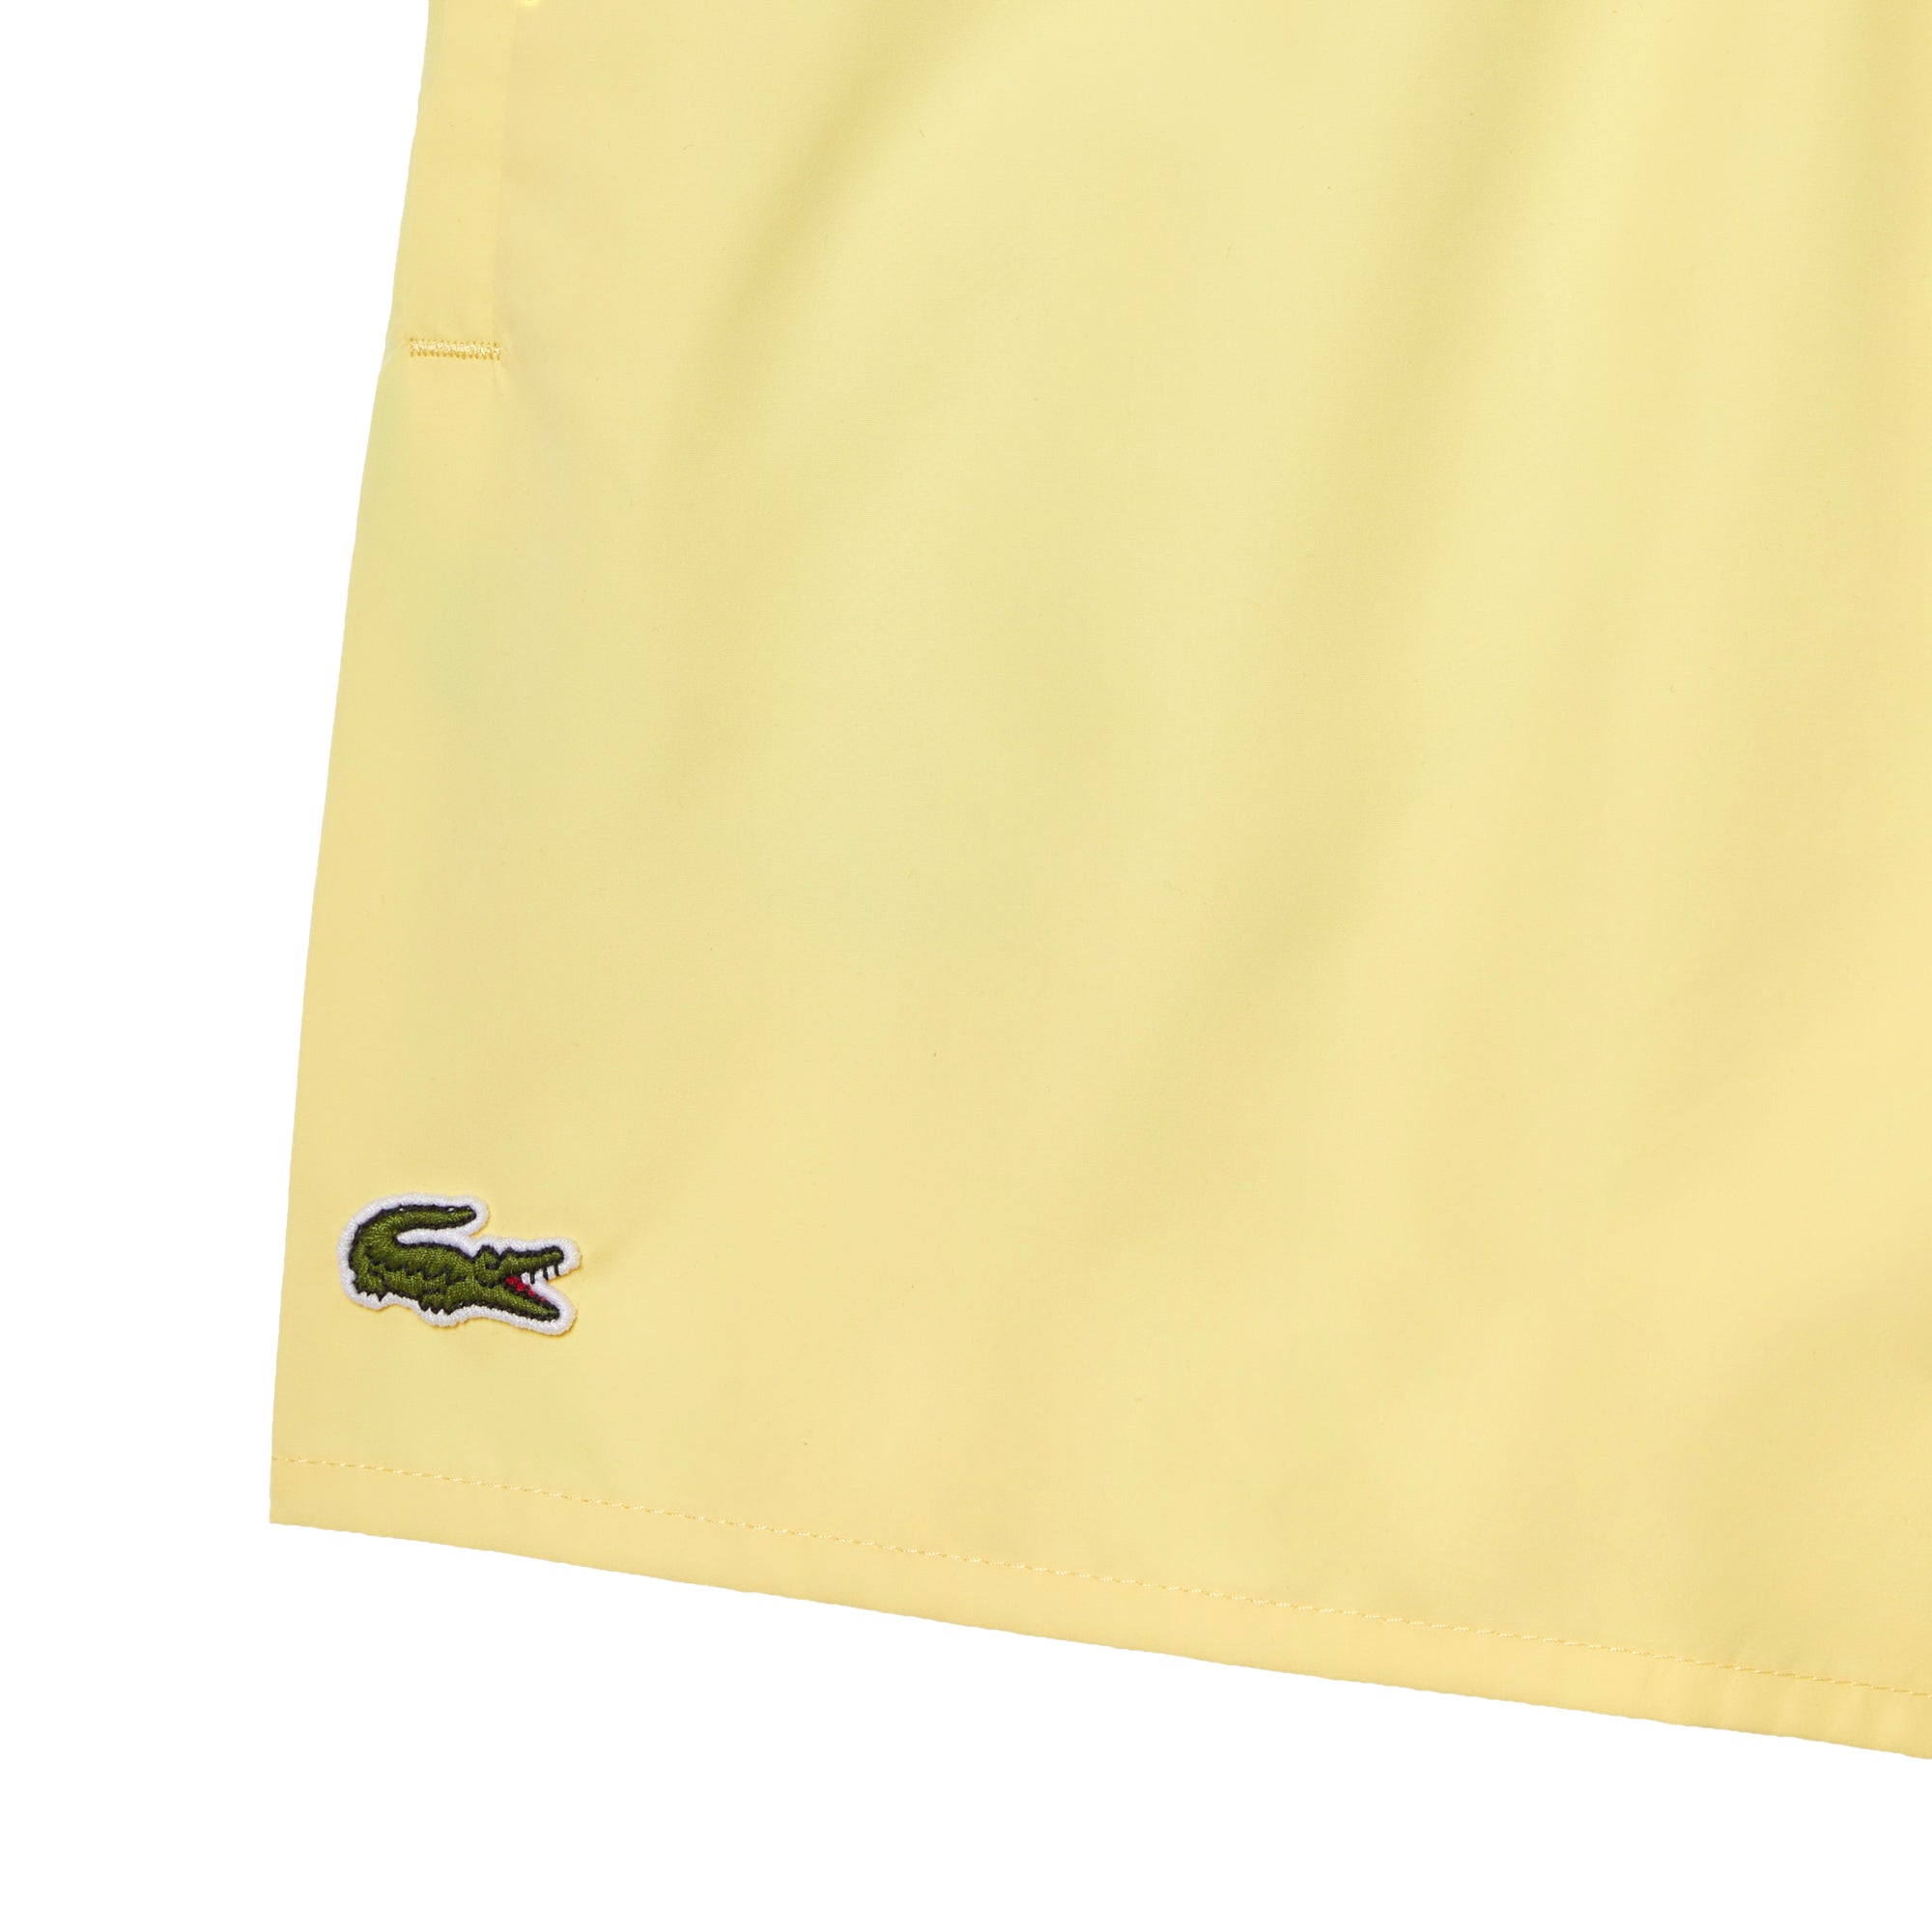 Lacoste Light Quick Dry Swim Shorts MH6270 - Yellow